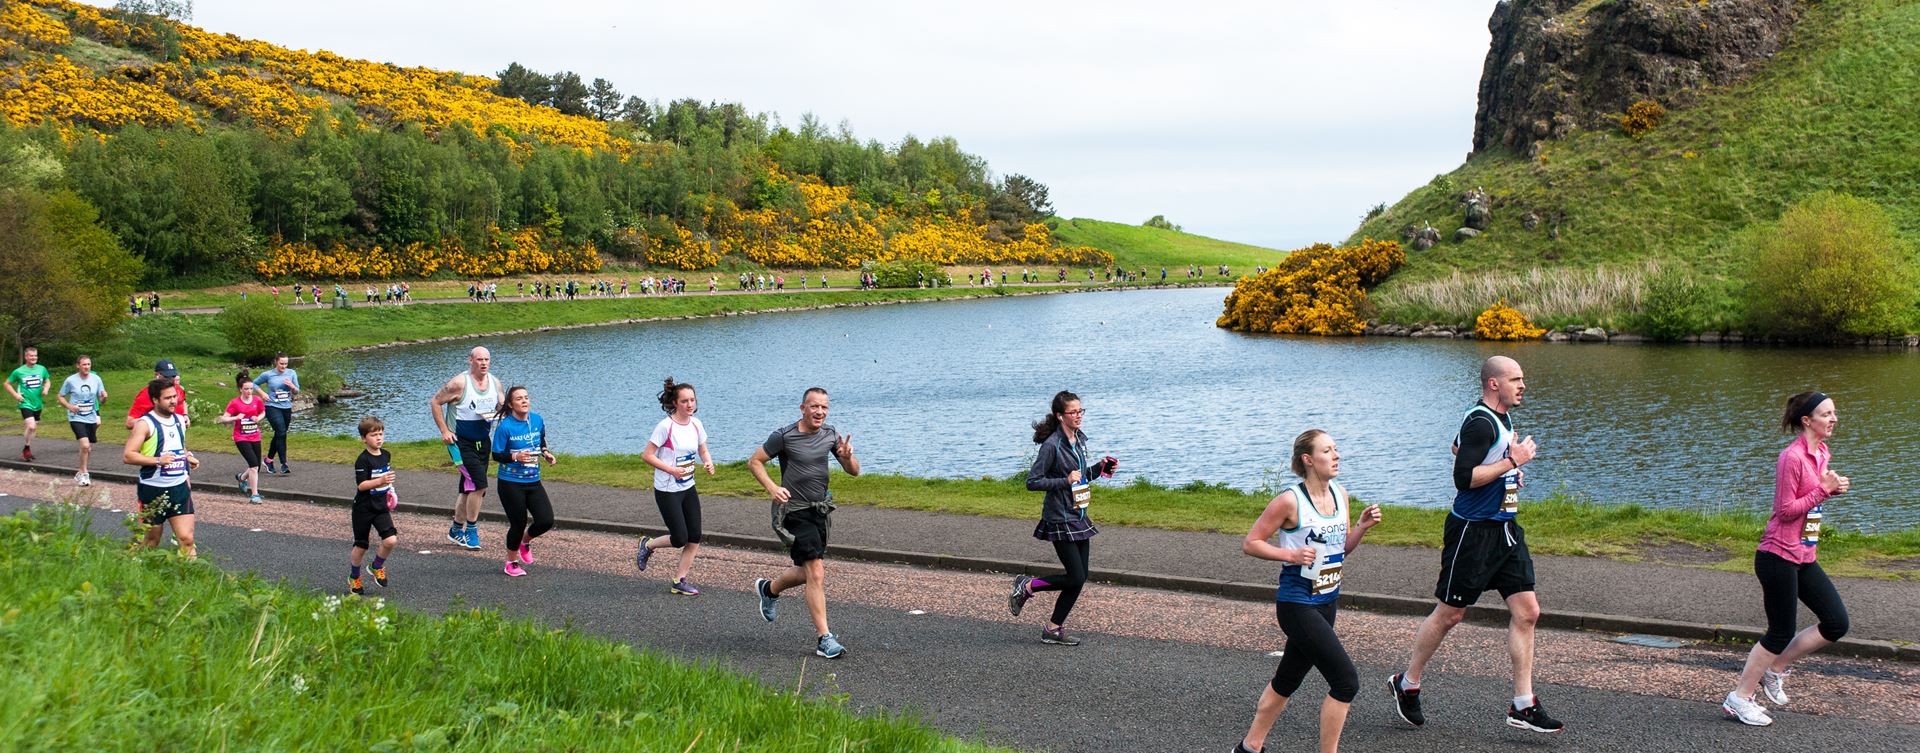 A photo of Edinburgh Marathon runners at Arthurs Seat pond